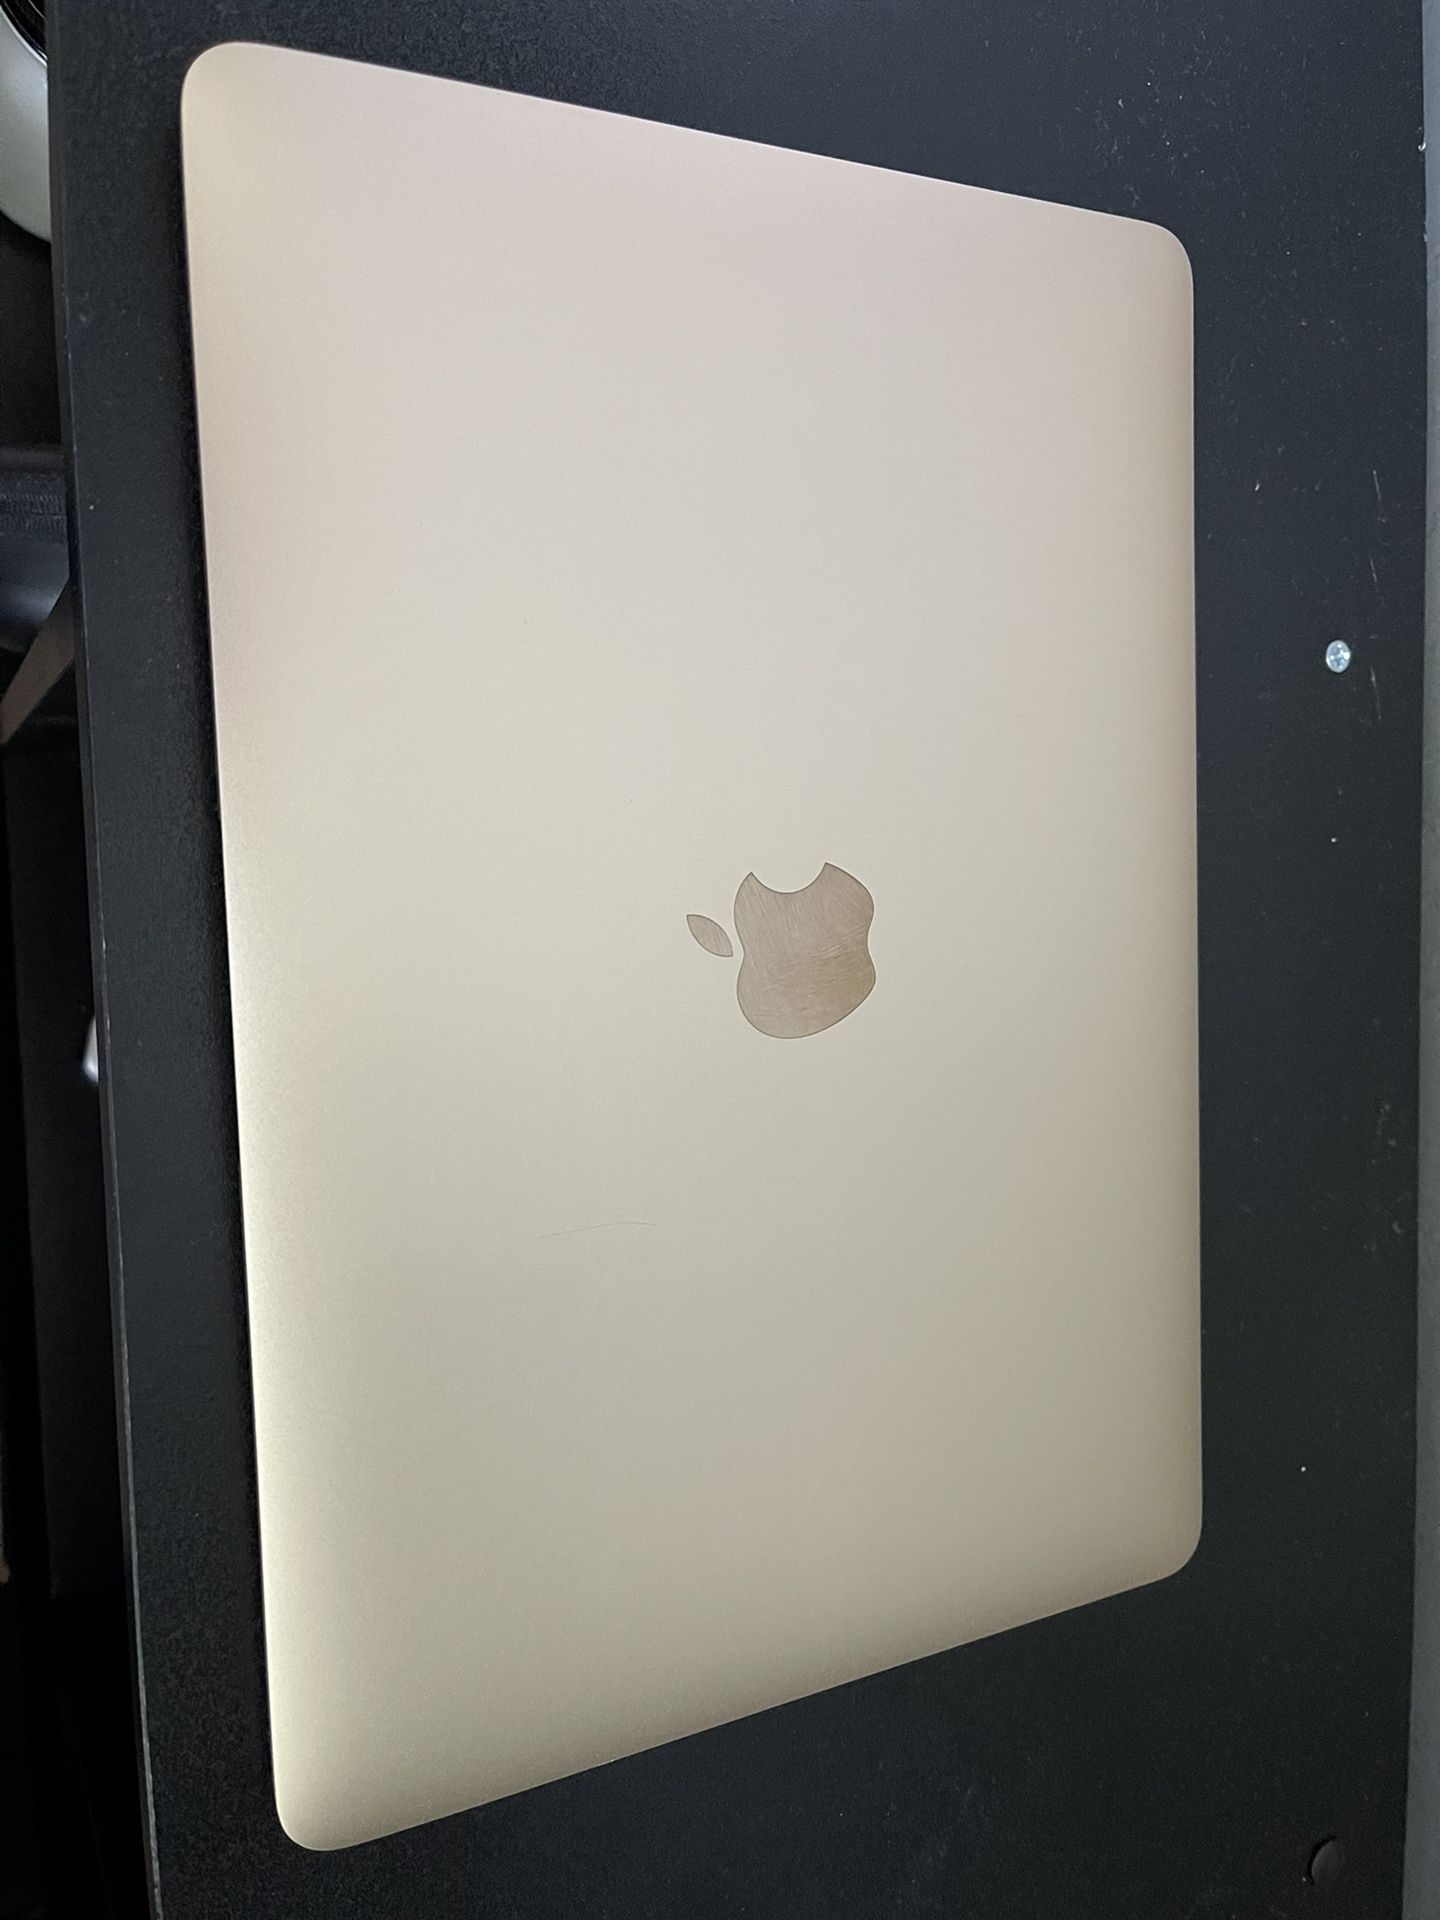 M3 Macbook (1.2 GHz, 8 GB RAM, Gold) Excellent Condition 